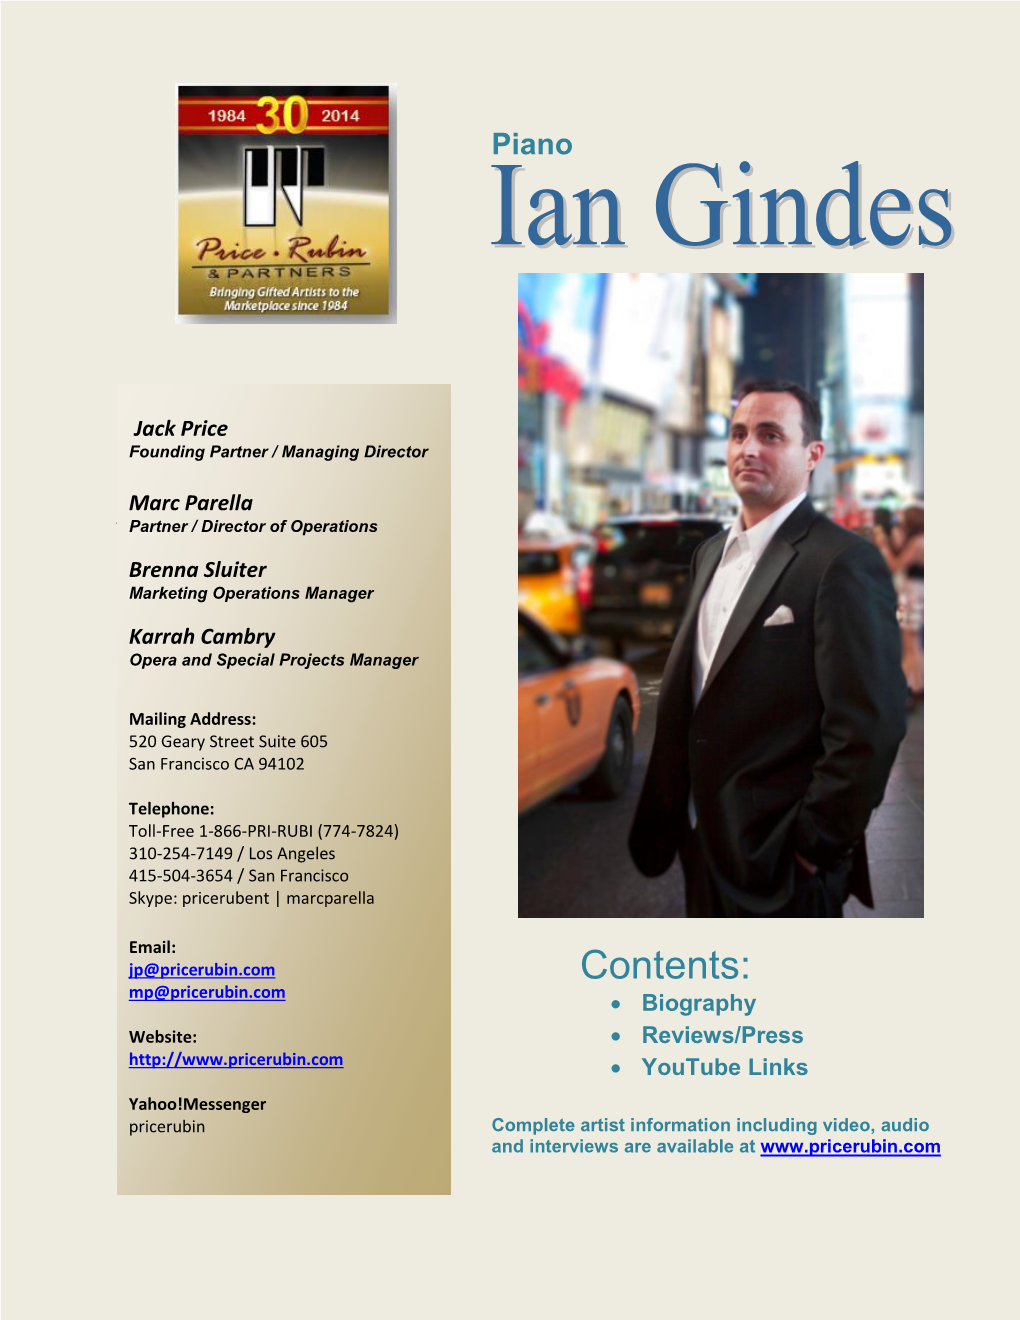 Ian Gindes – Biography